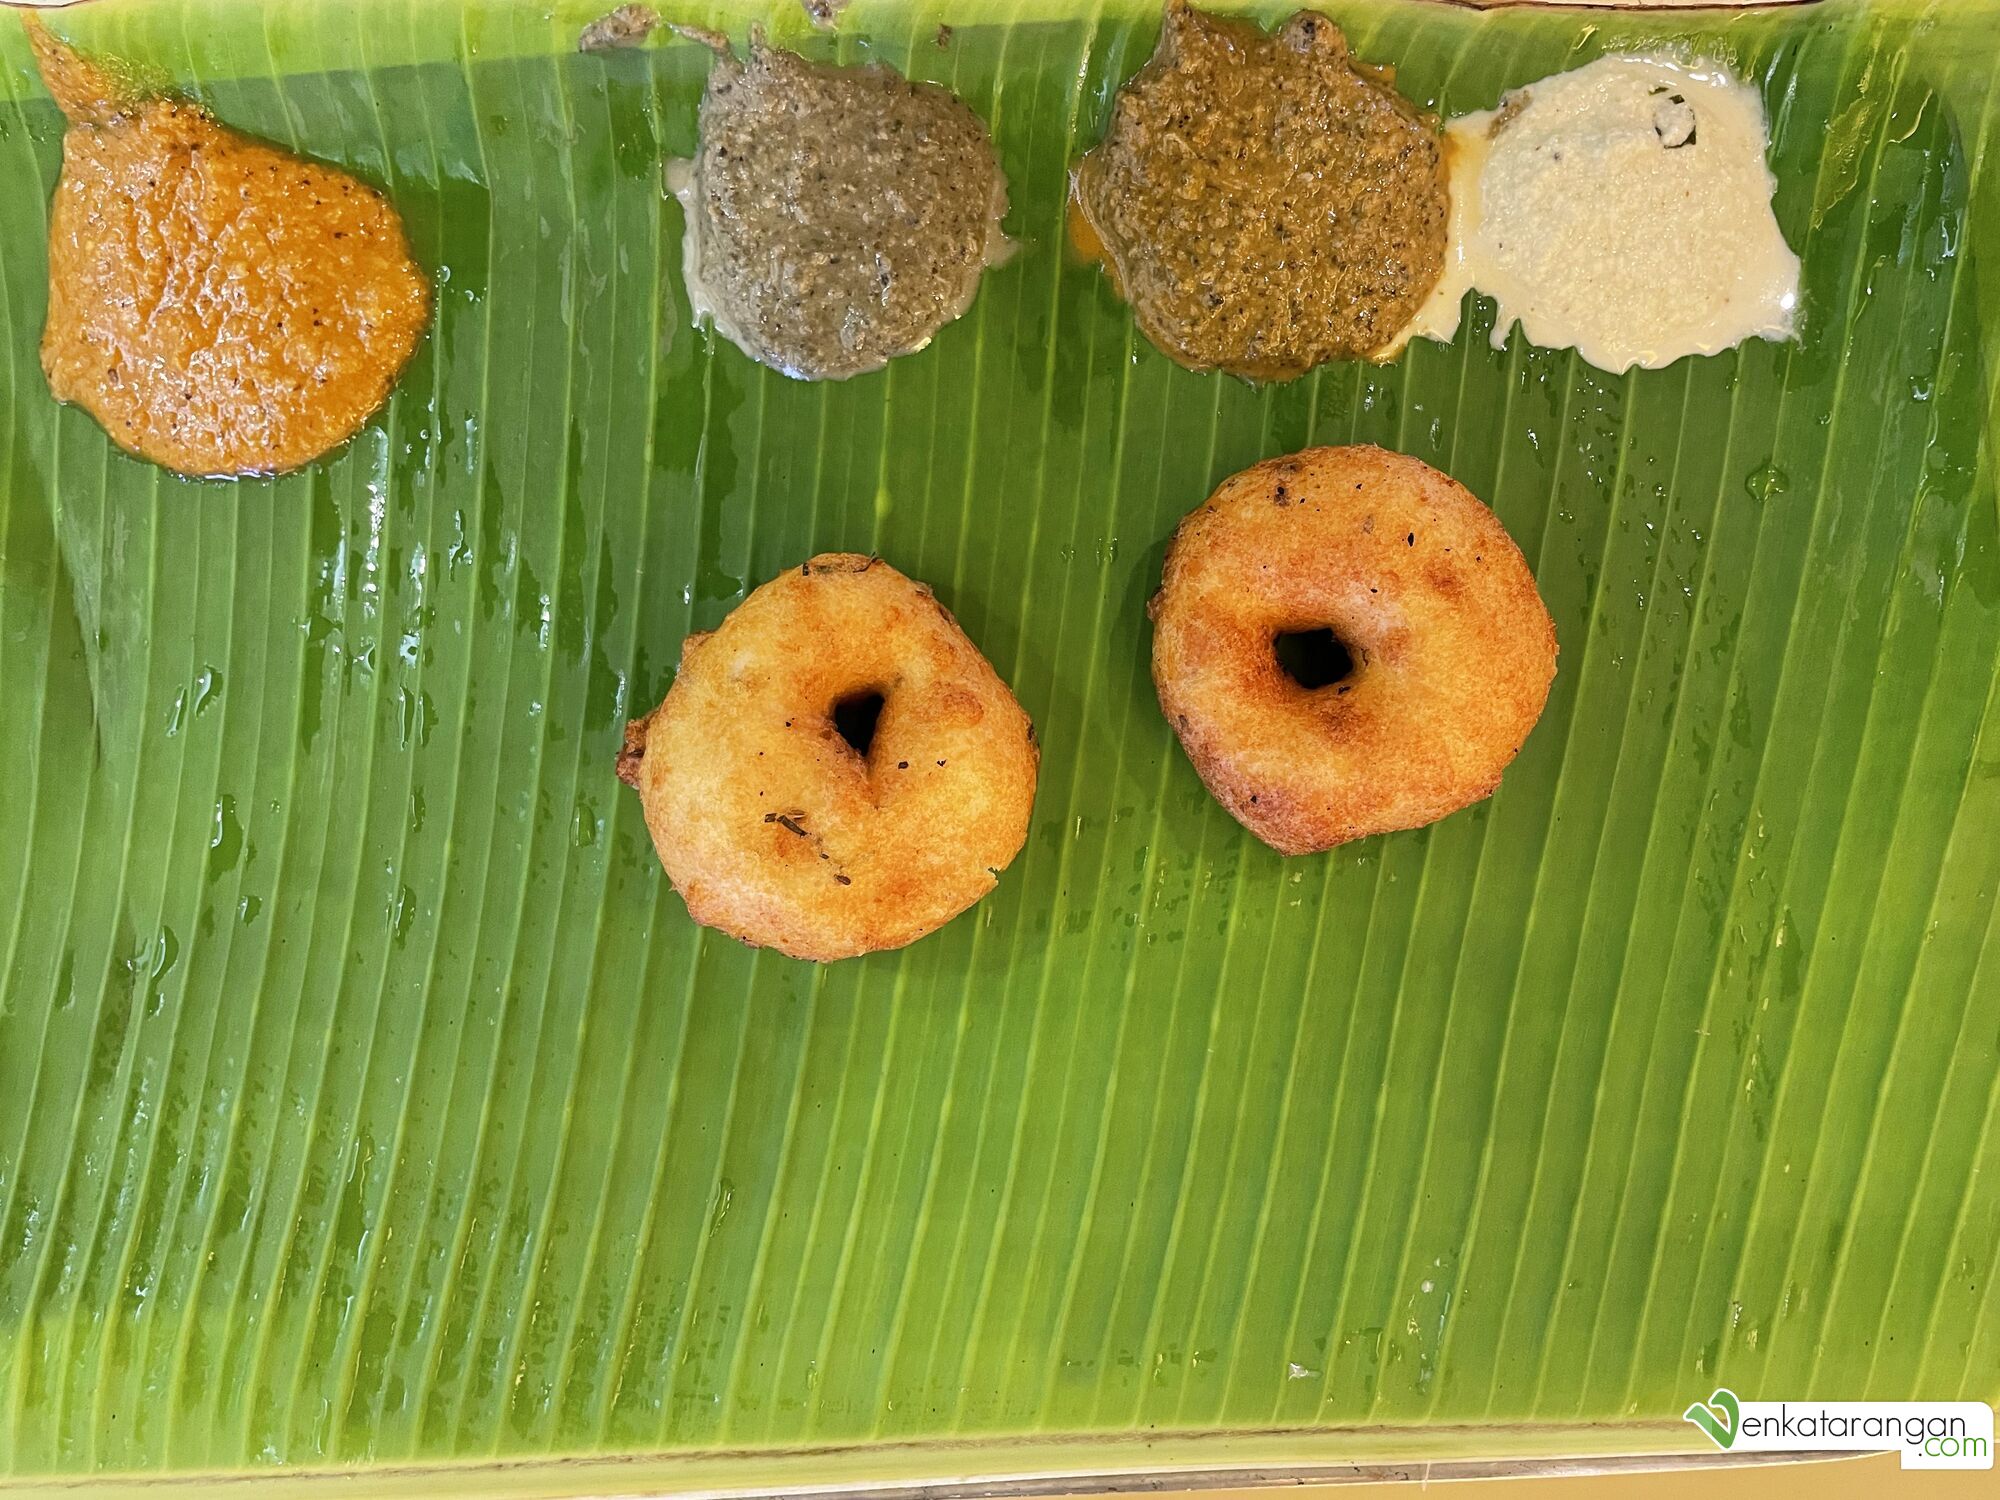 Tasty vadais with four chutneys – சுவையான நான்கு வகை சட்னி மற்றும் சூடான வடைகள்